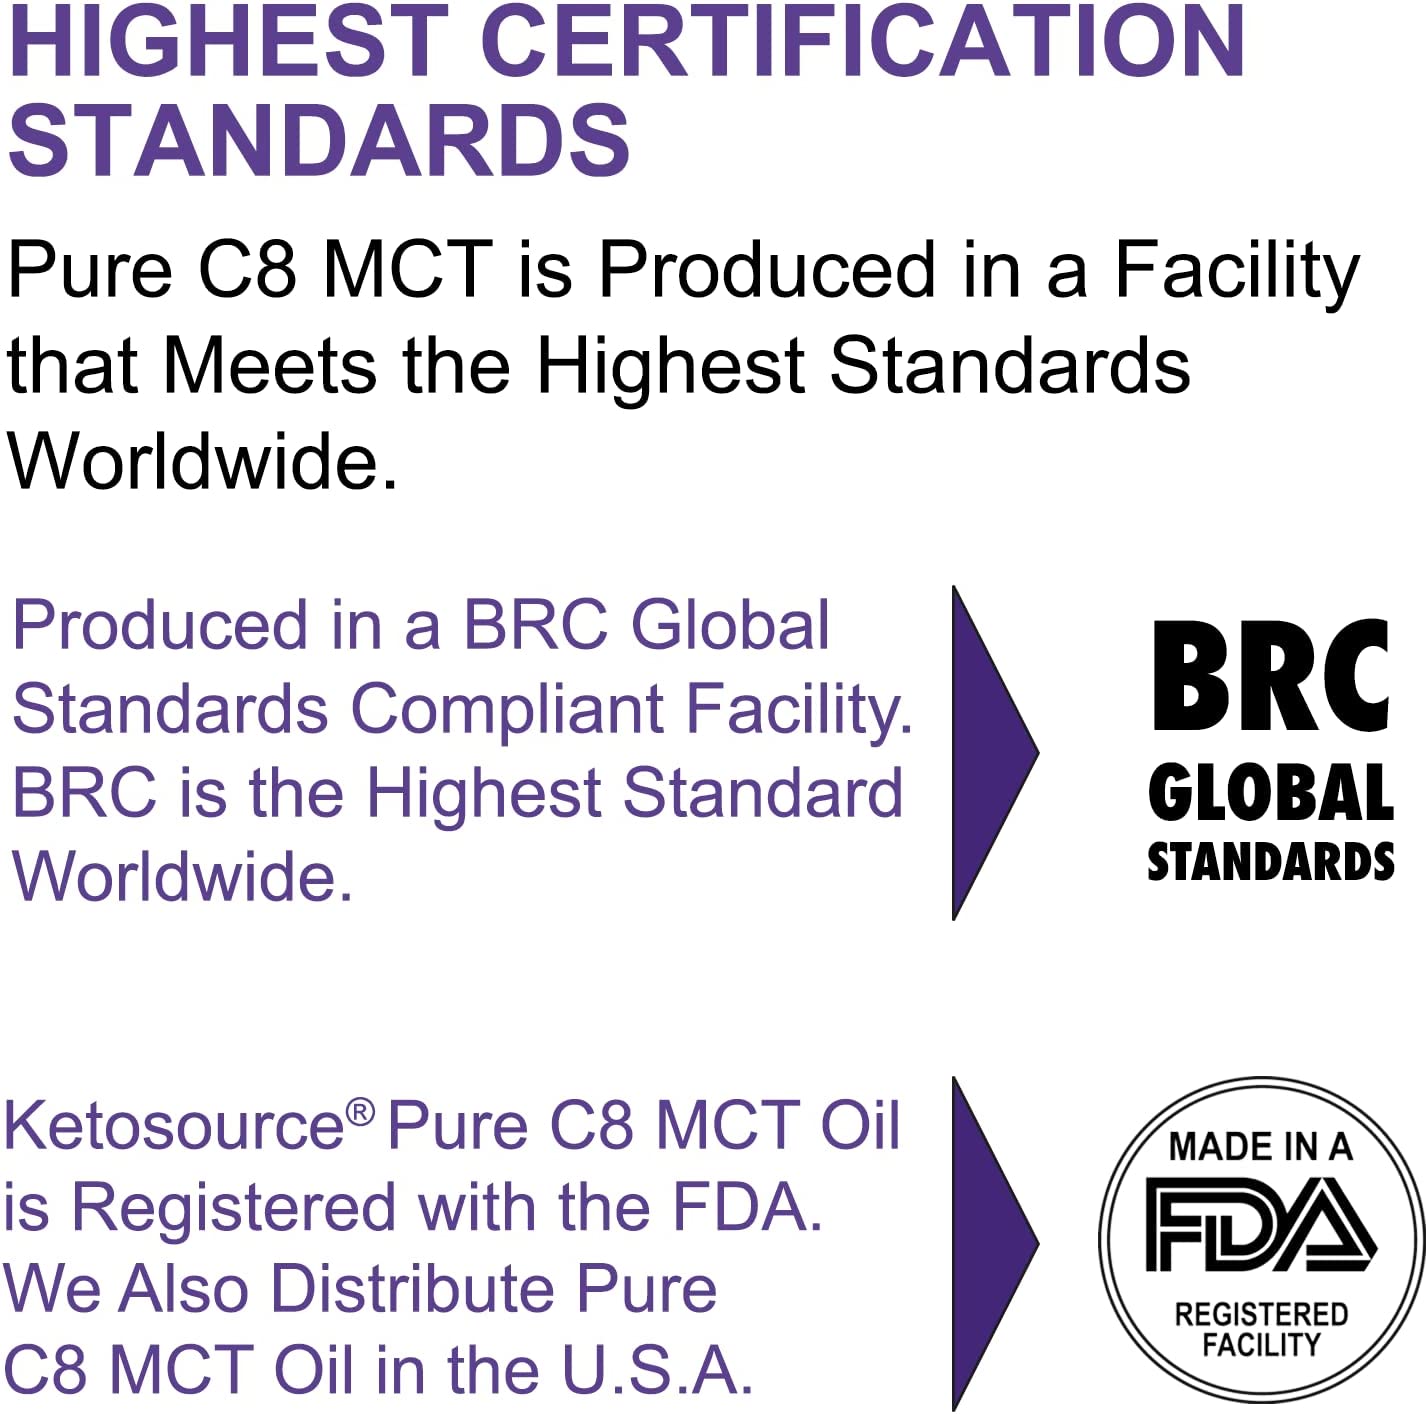 Ketosource Pure C8 MCT Oil